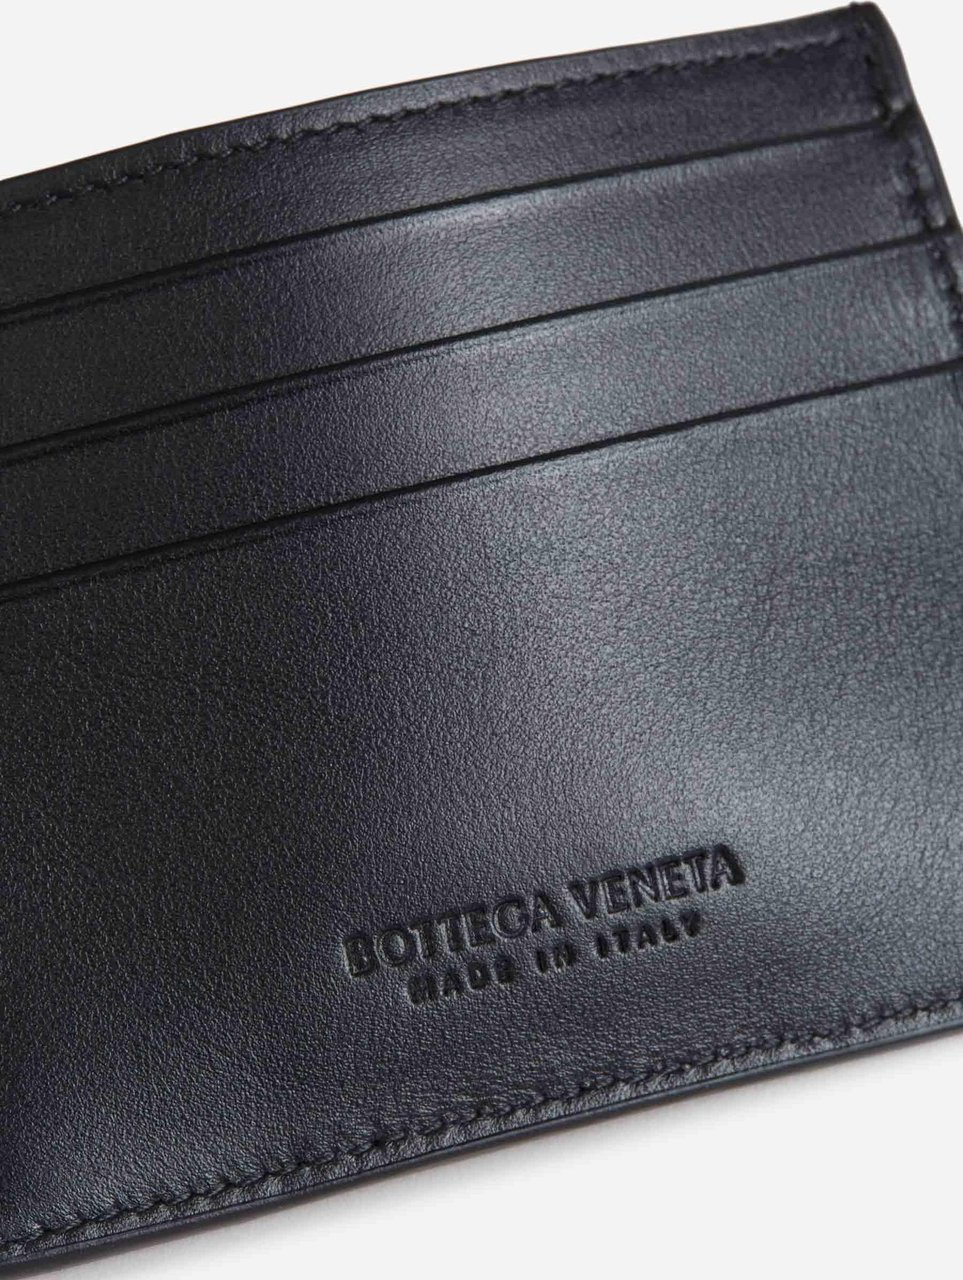 Bottega Veneta Intrecciato Leather Card Holder Divers